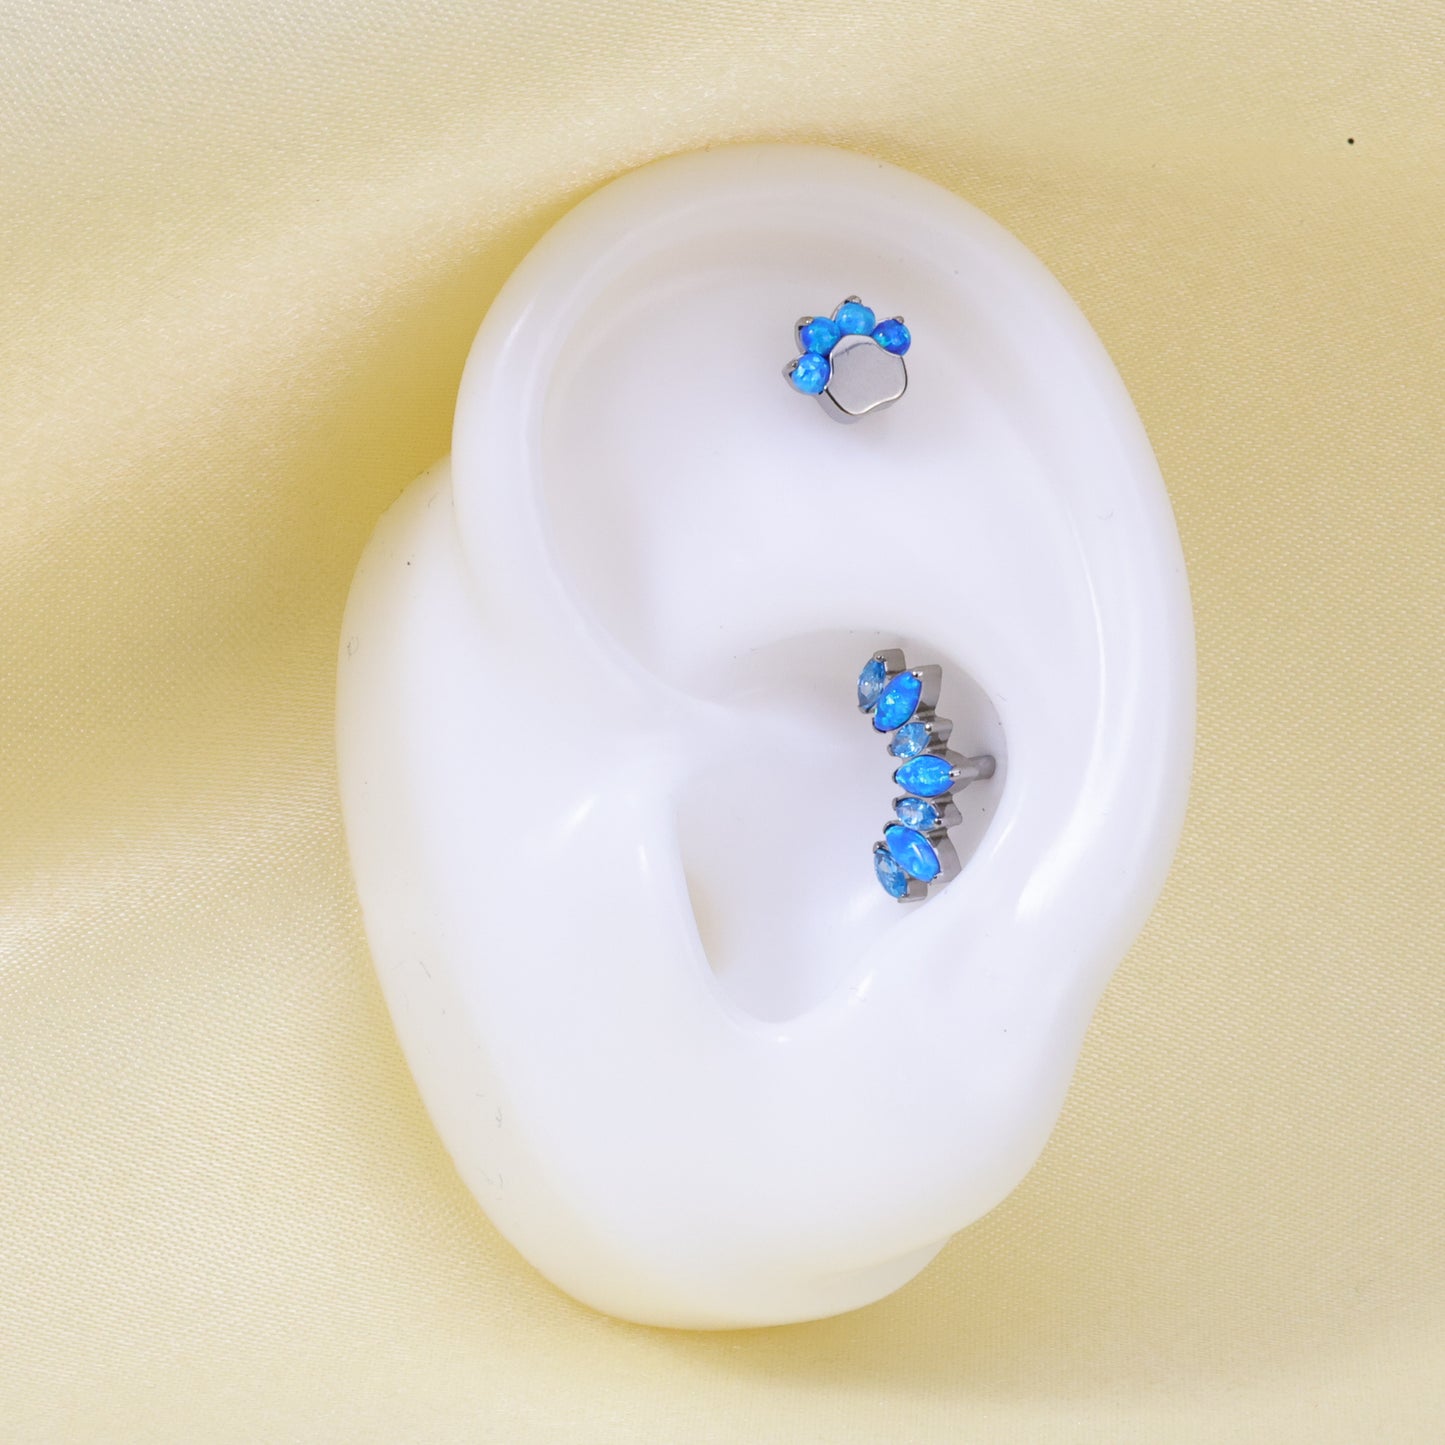 Implant-Grade Titanium Blue Opal Paw Flat Back Earring